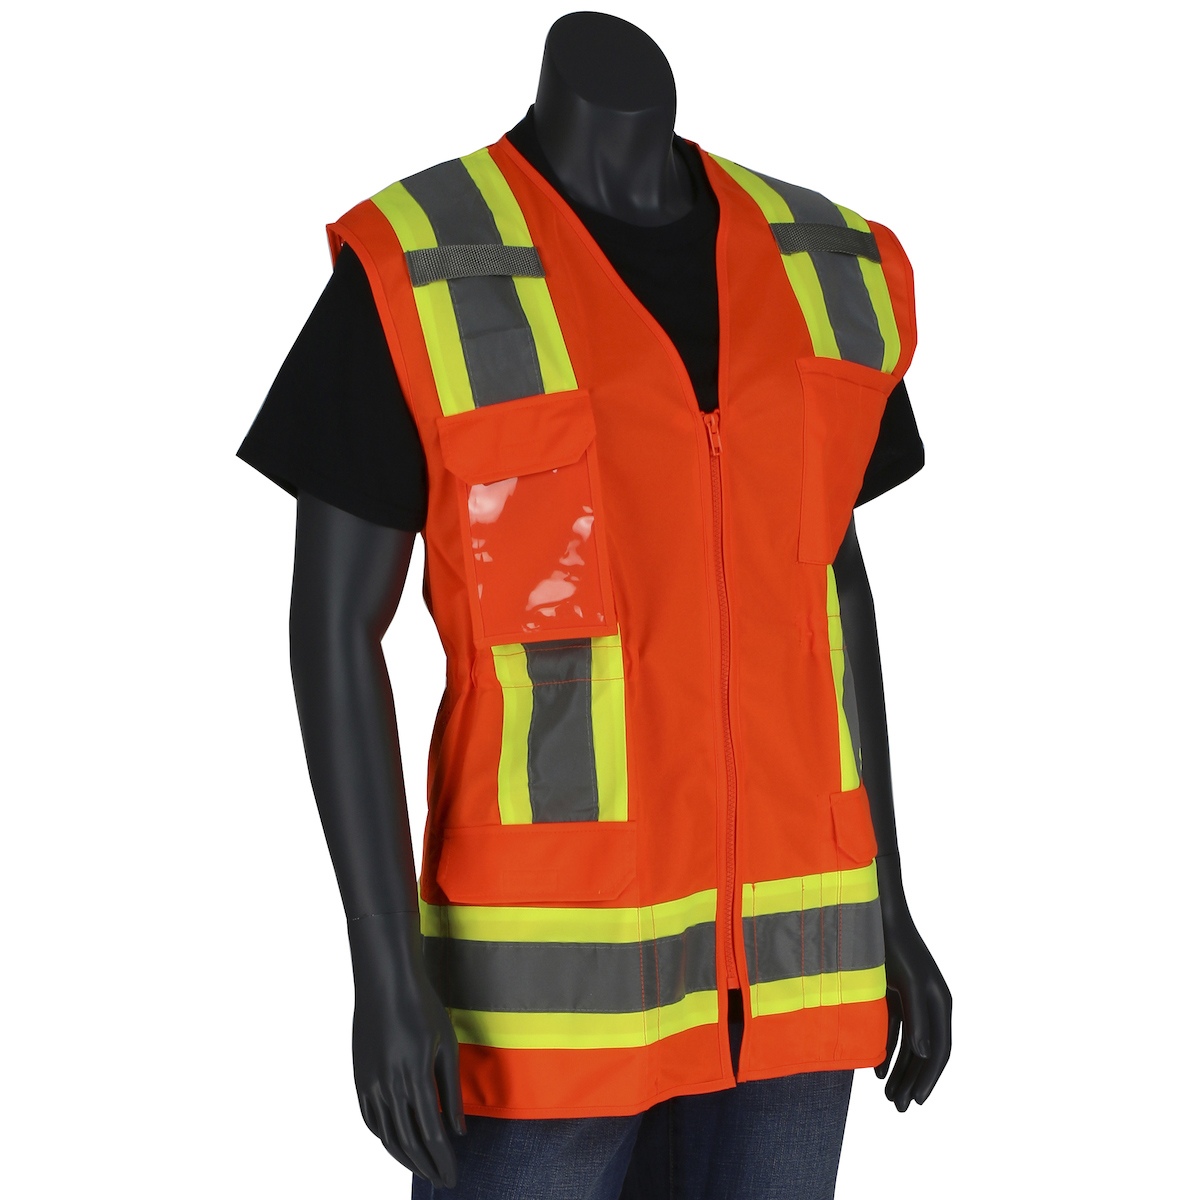 PIP 302-0512 Type R Class Women's Solid Front Surveyor Safety Vest  Orange Full Source